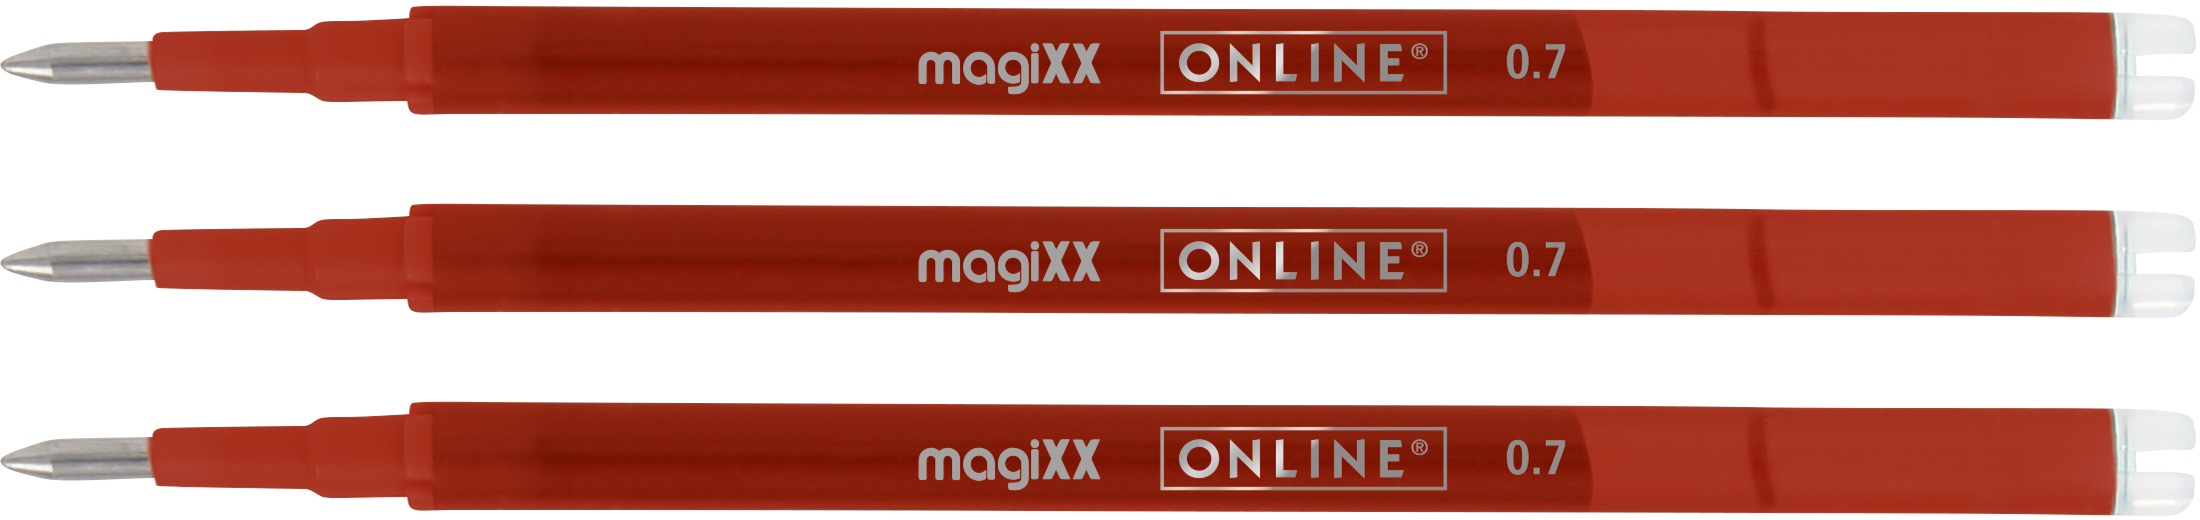 ONLINE Mine Gel MagiXX 40162/3 rouge, Tag-Bag 0.7mm rouge, Tag-Bag 0.7mm